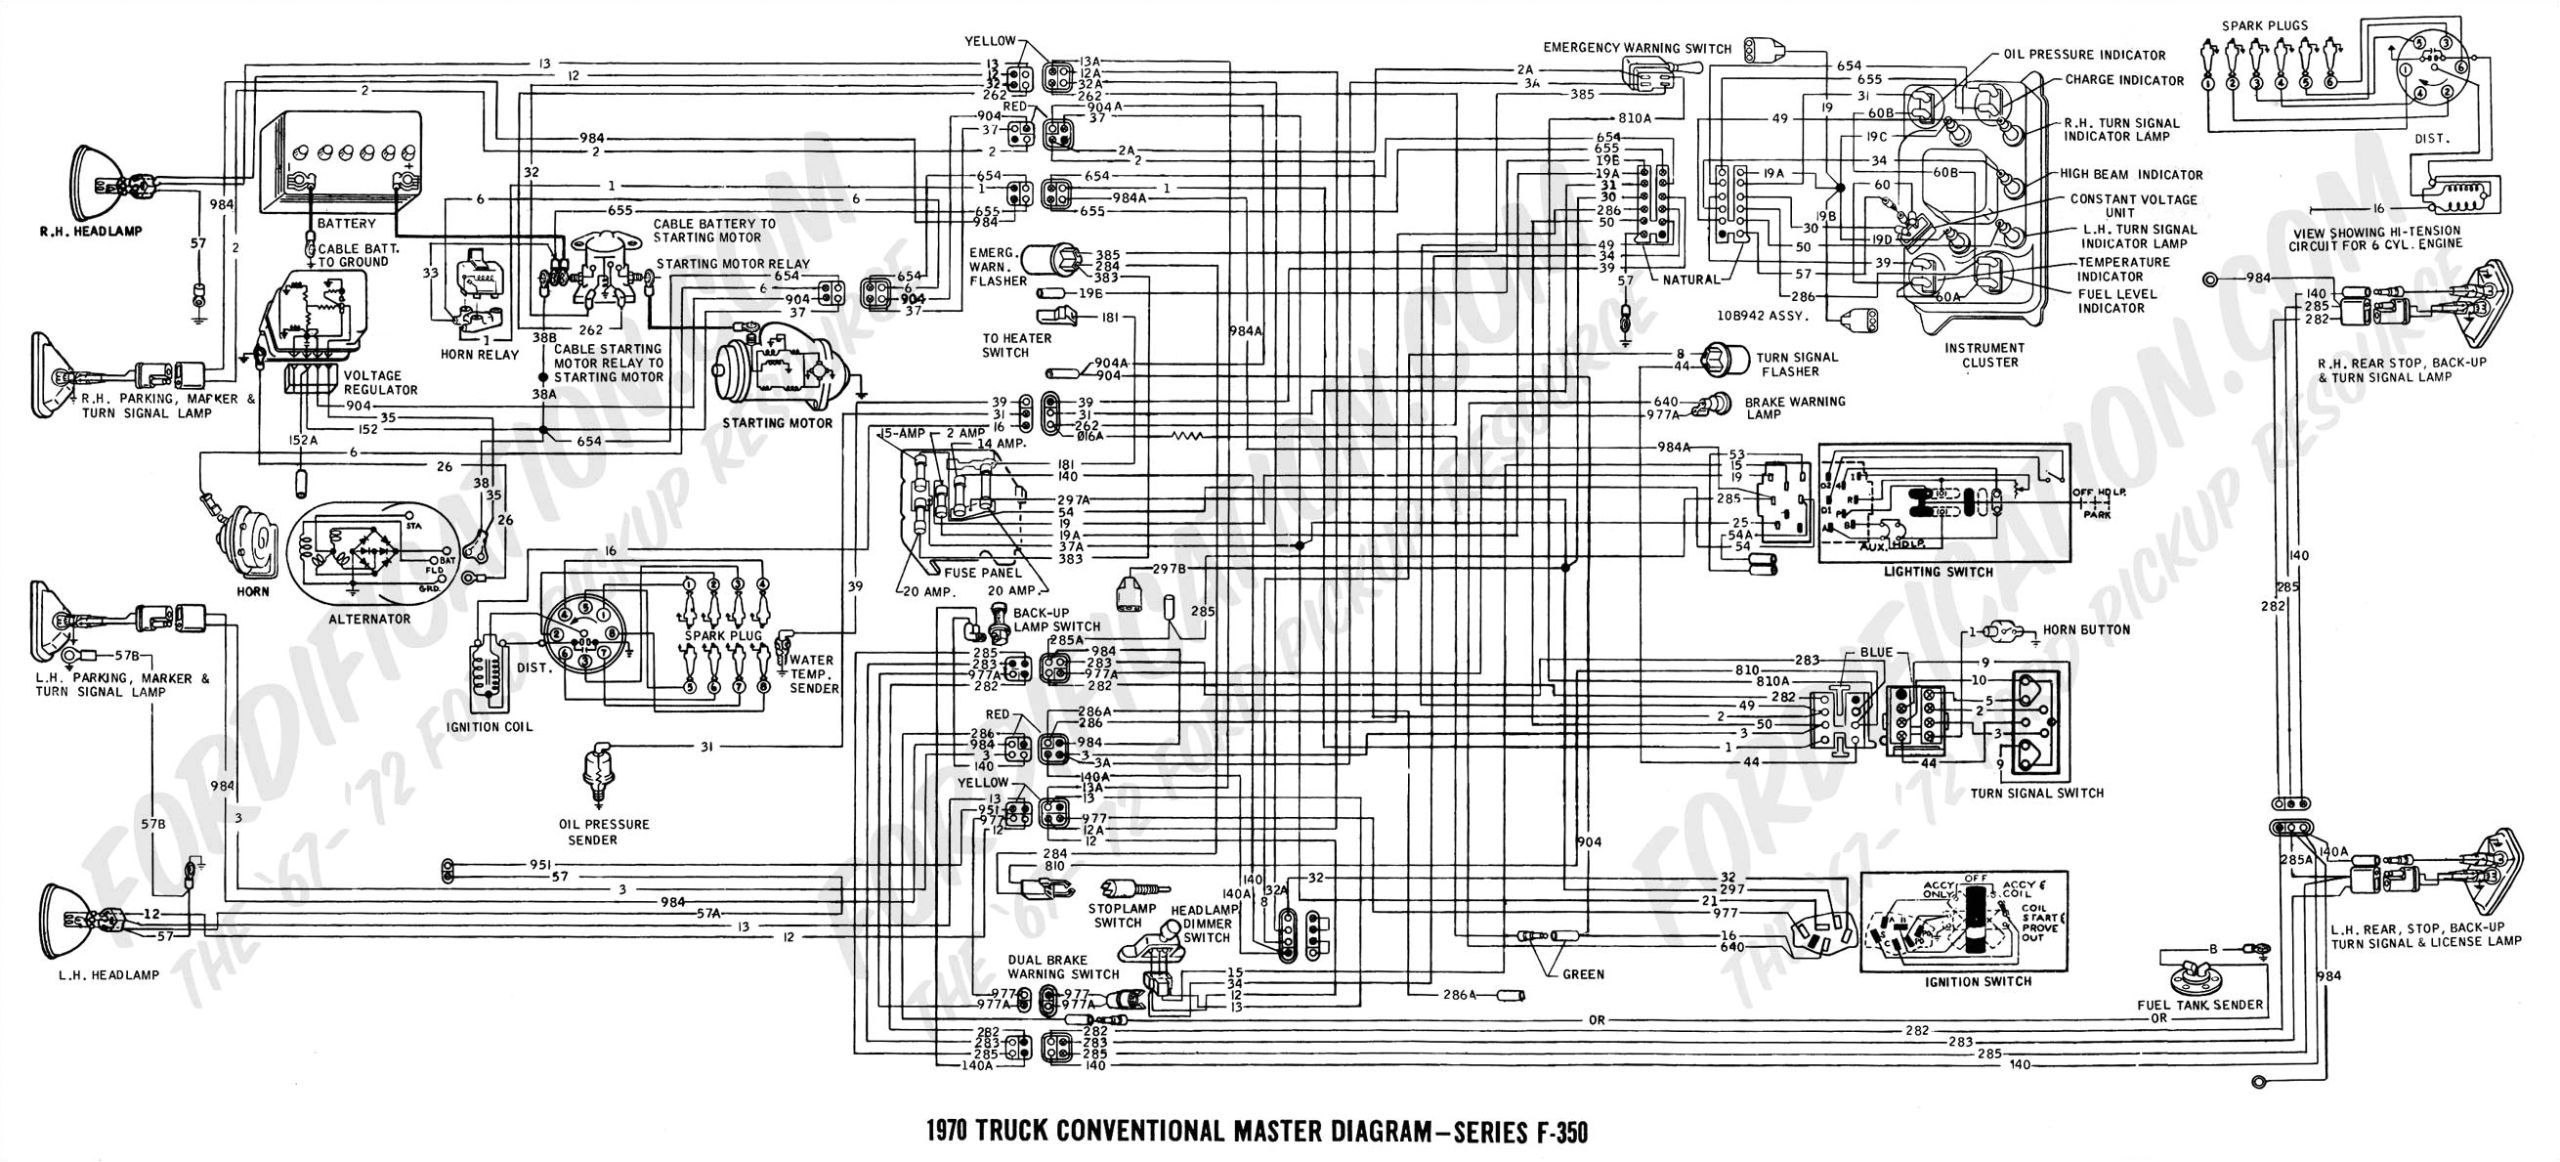 wiring diagram 70f350 master jpg